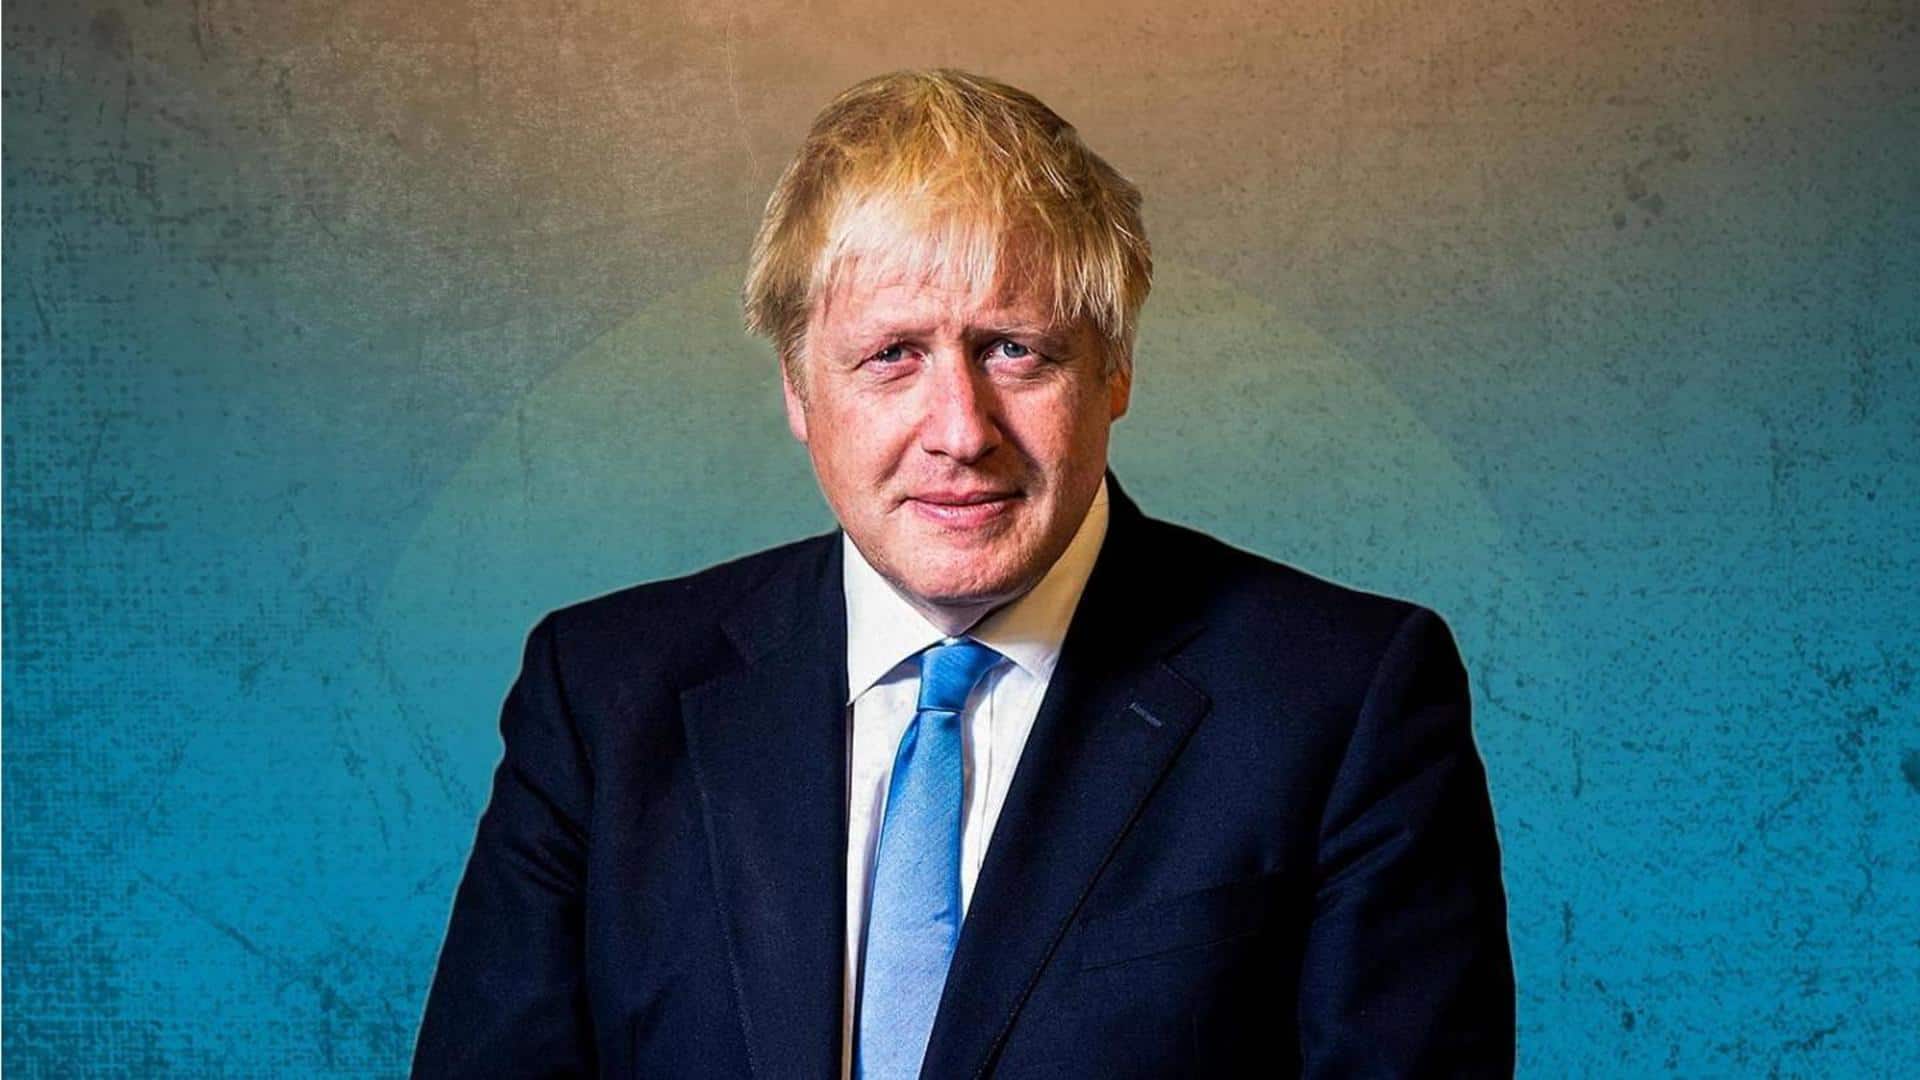 Former UK PM Boris Johnson expecting 8th child at 58